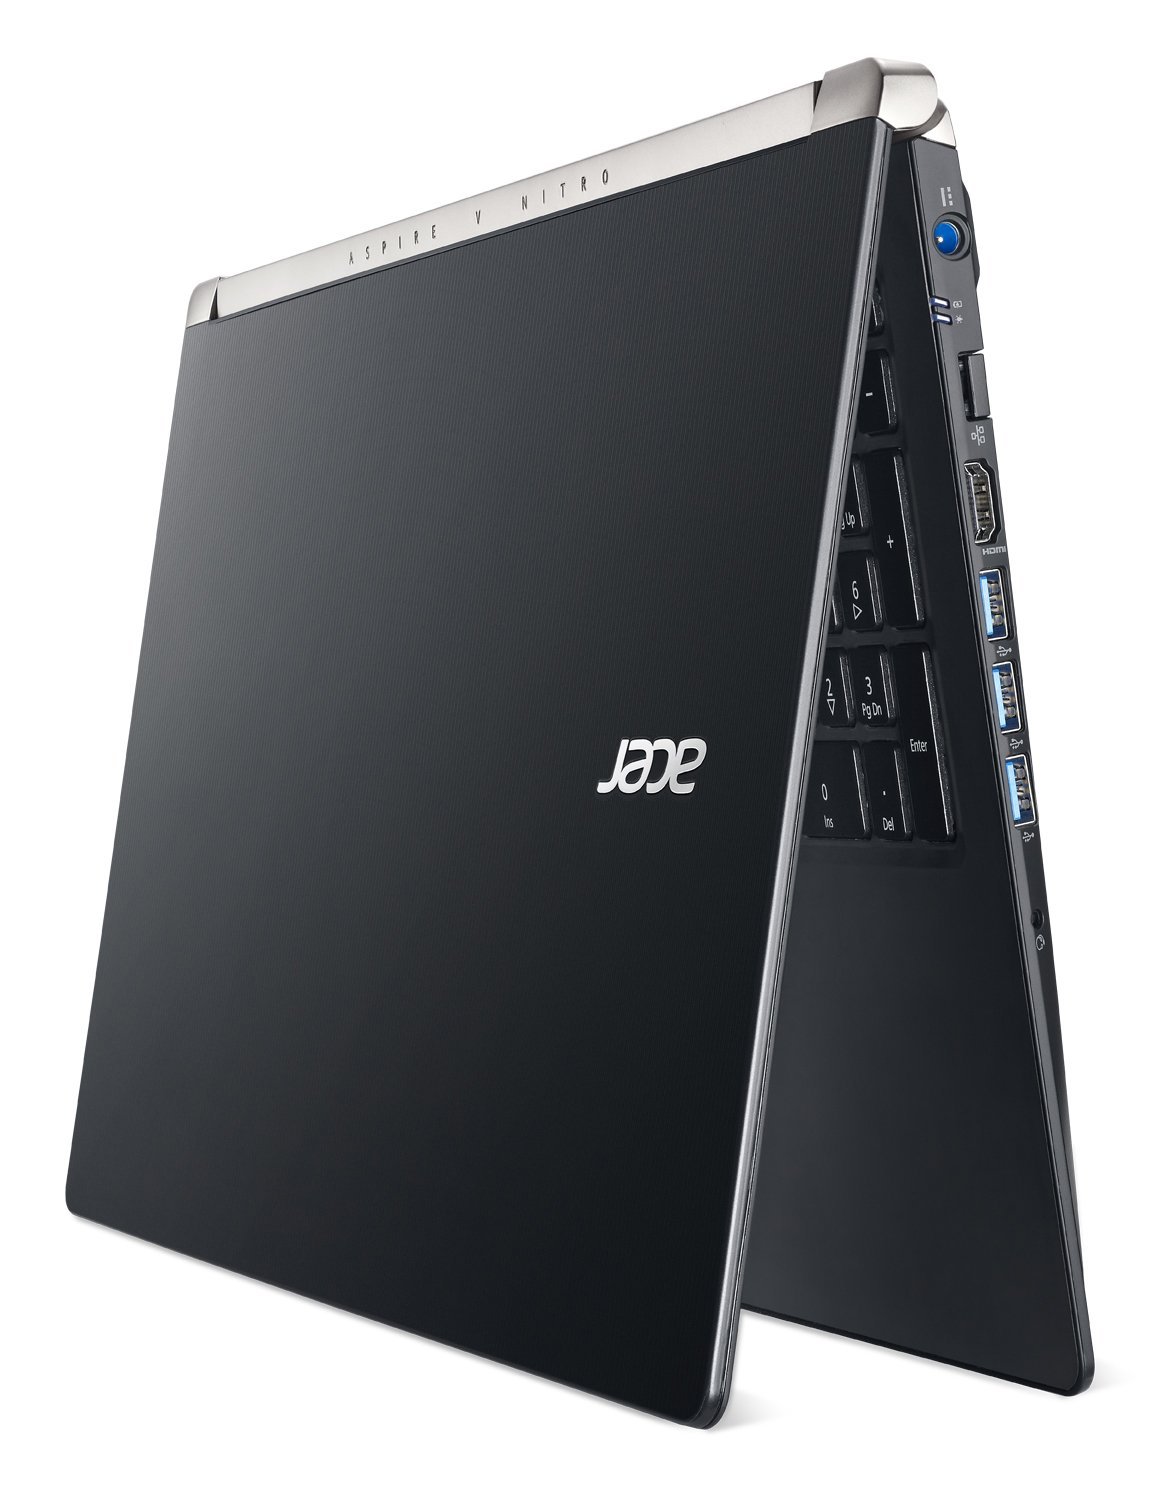 Acer Aspire V15 Nitro VN7-591G-75S2